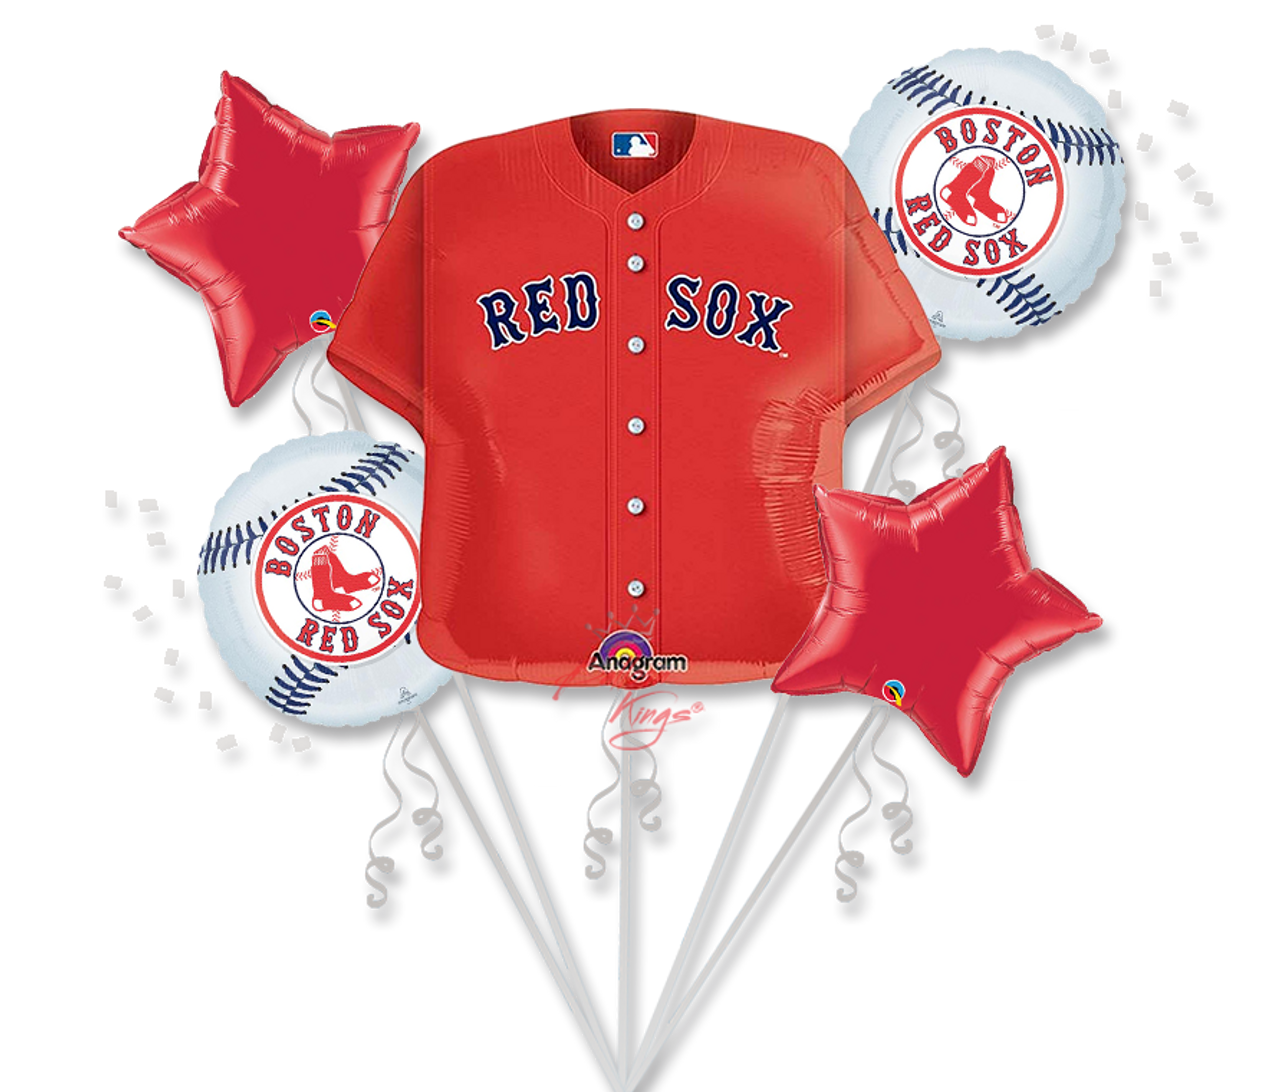 MLB - Boston Red Sox Logo Stencil